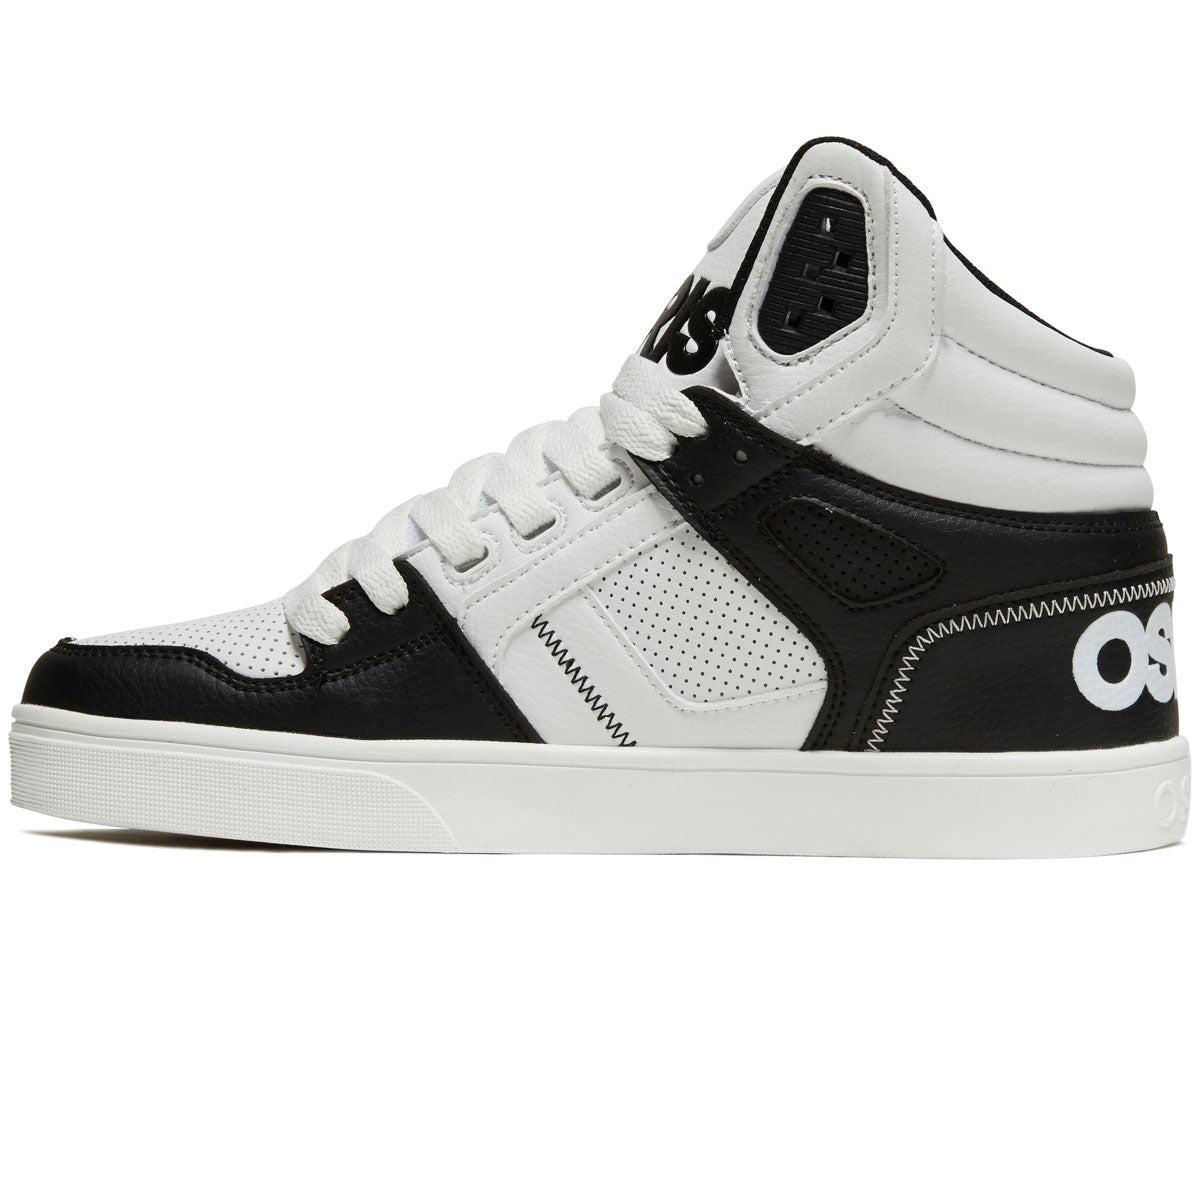 Osiris Clone Shoes - Black/White/Black image 2